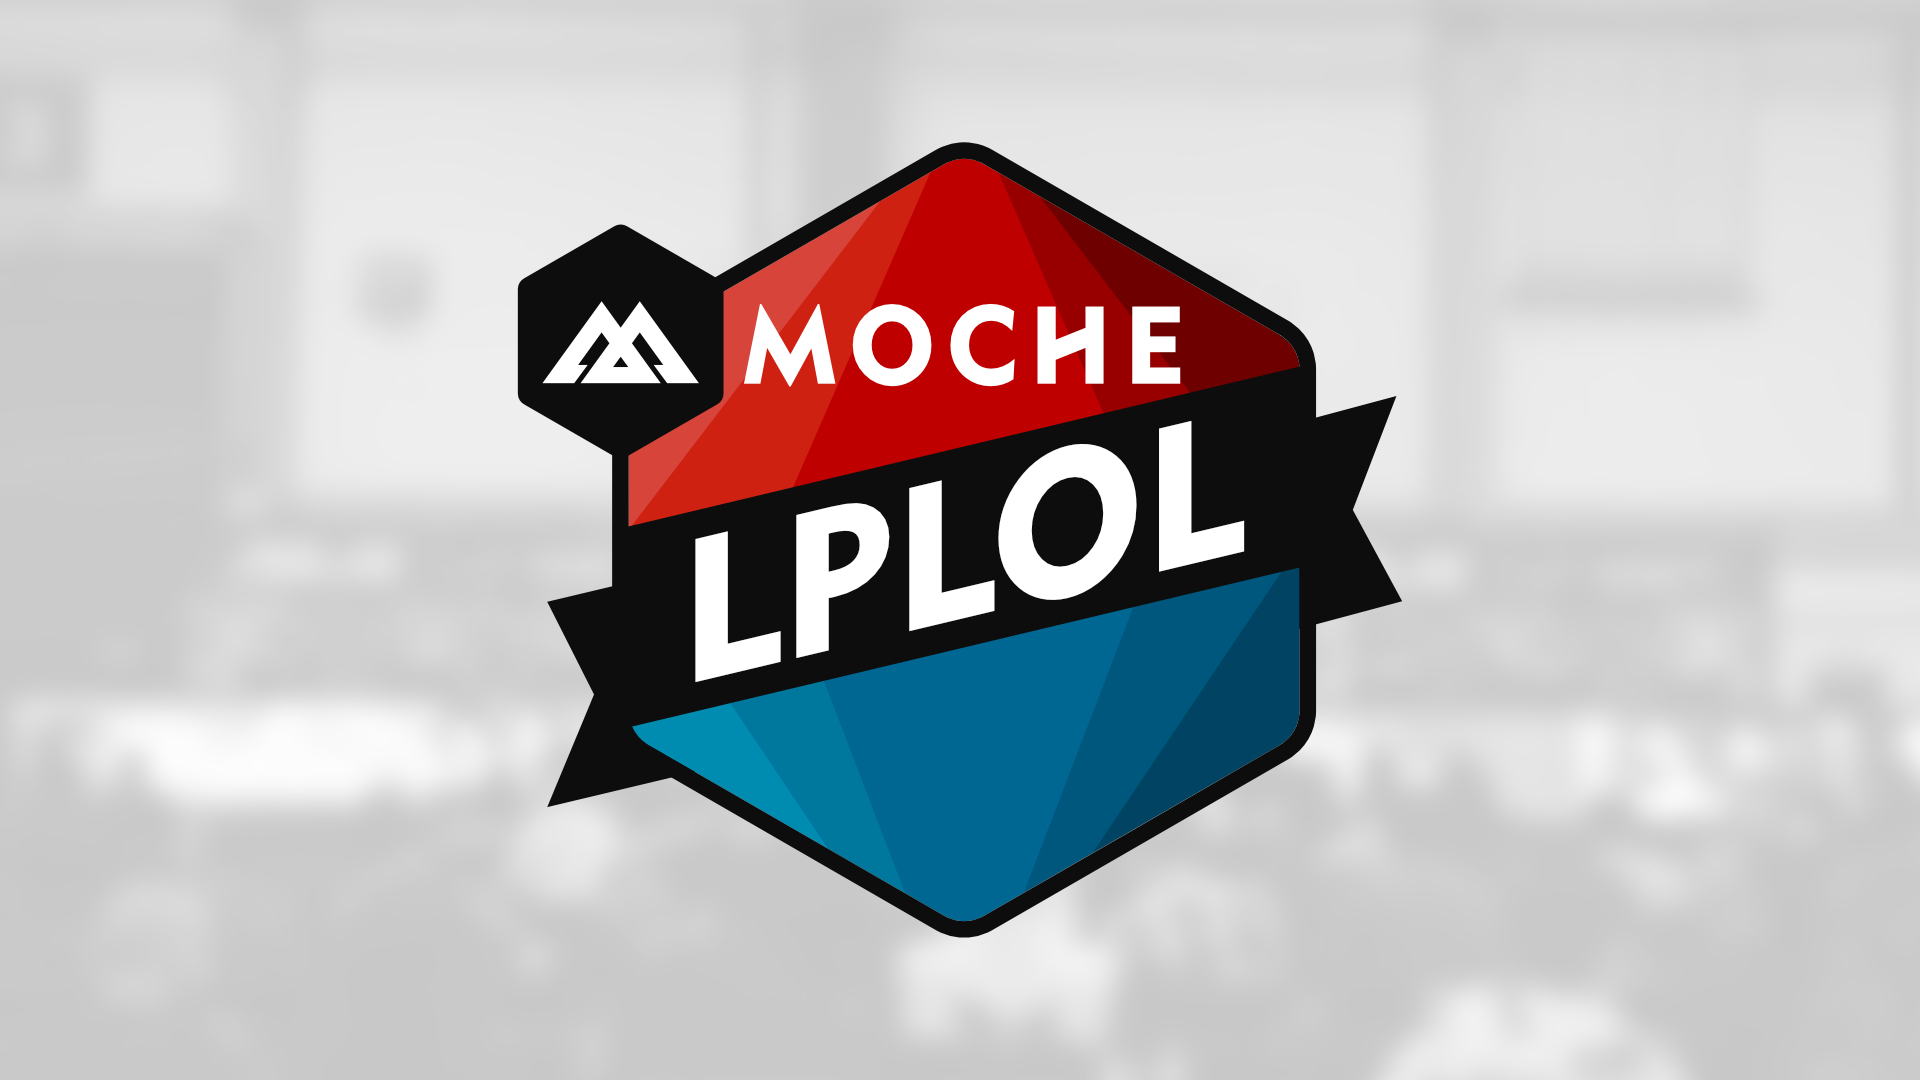 Novidades para a estreia da Moche LPLOL 2017 - 1 de Abril